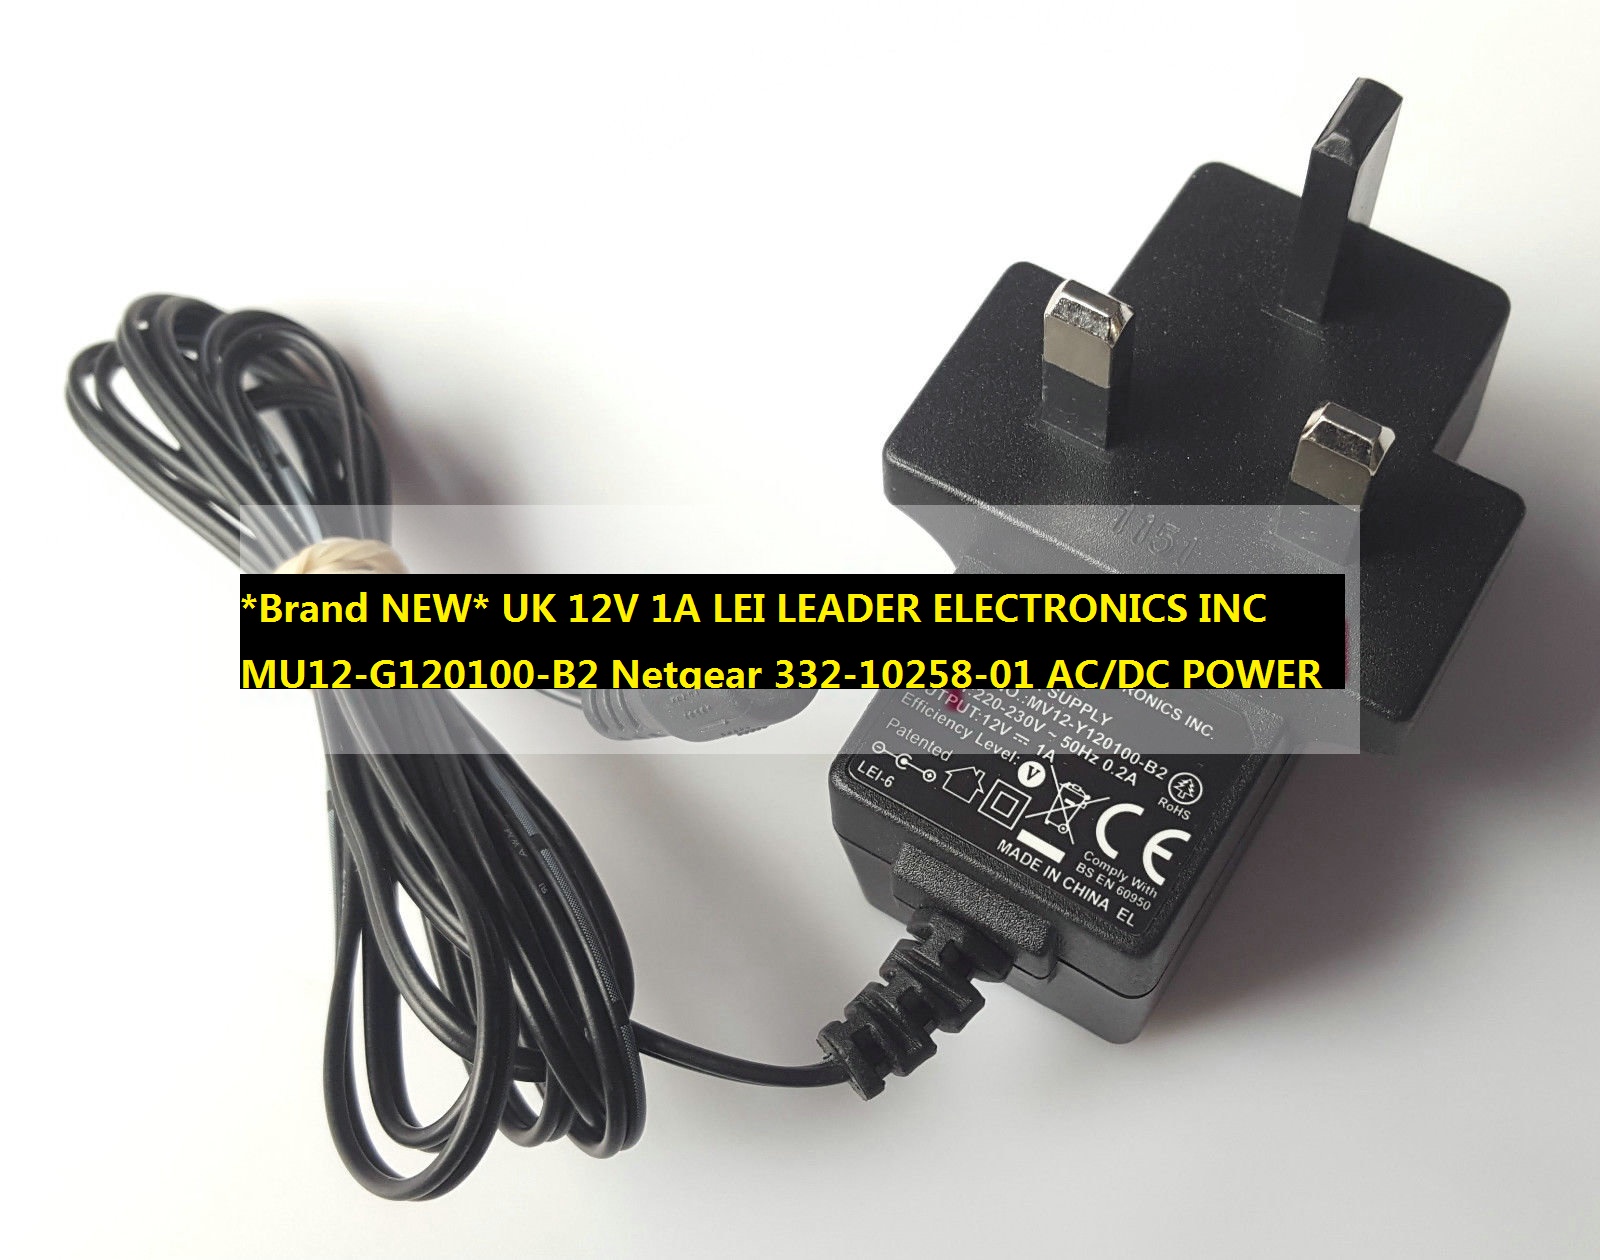 *Brand NEW* UK 12V 1A LEI LEADER ELECTRONICS INC MU12-G120100-B2 Netgear 332-10258-01 AC/DC POWER ADAPTER - Click Image to Close